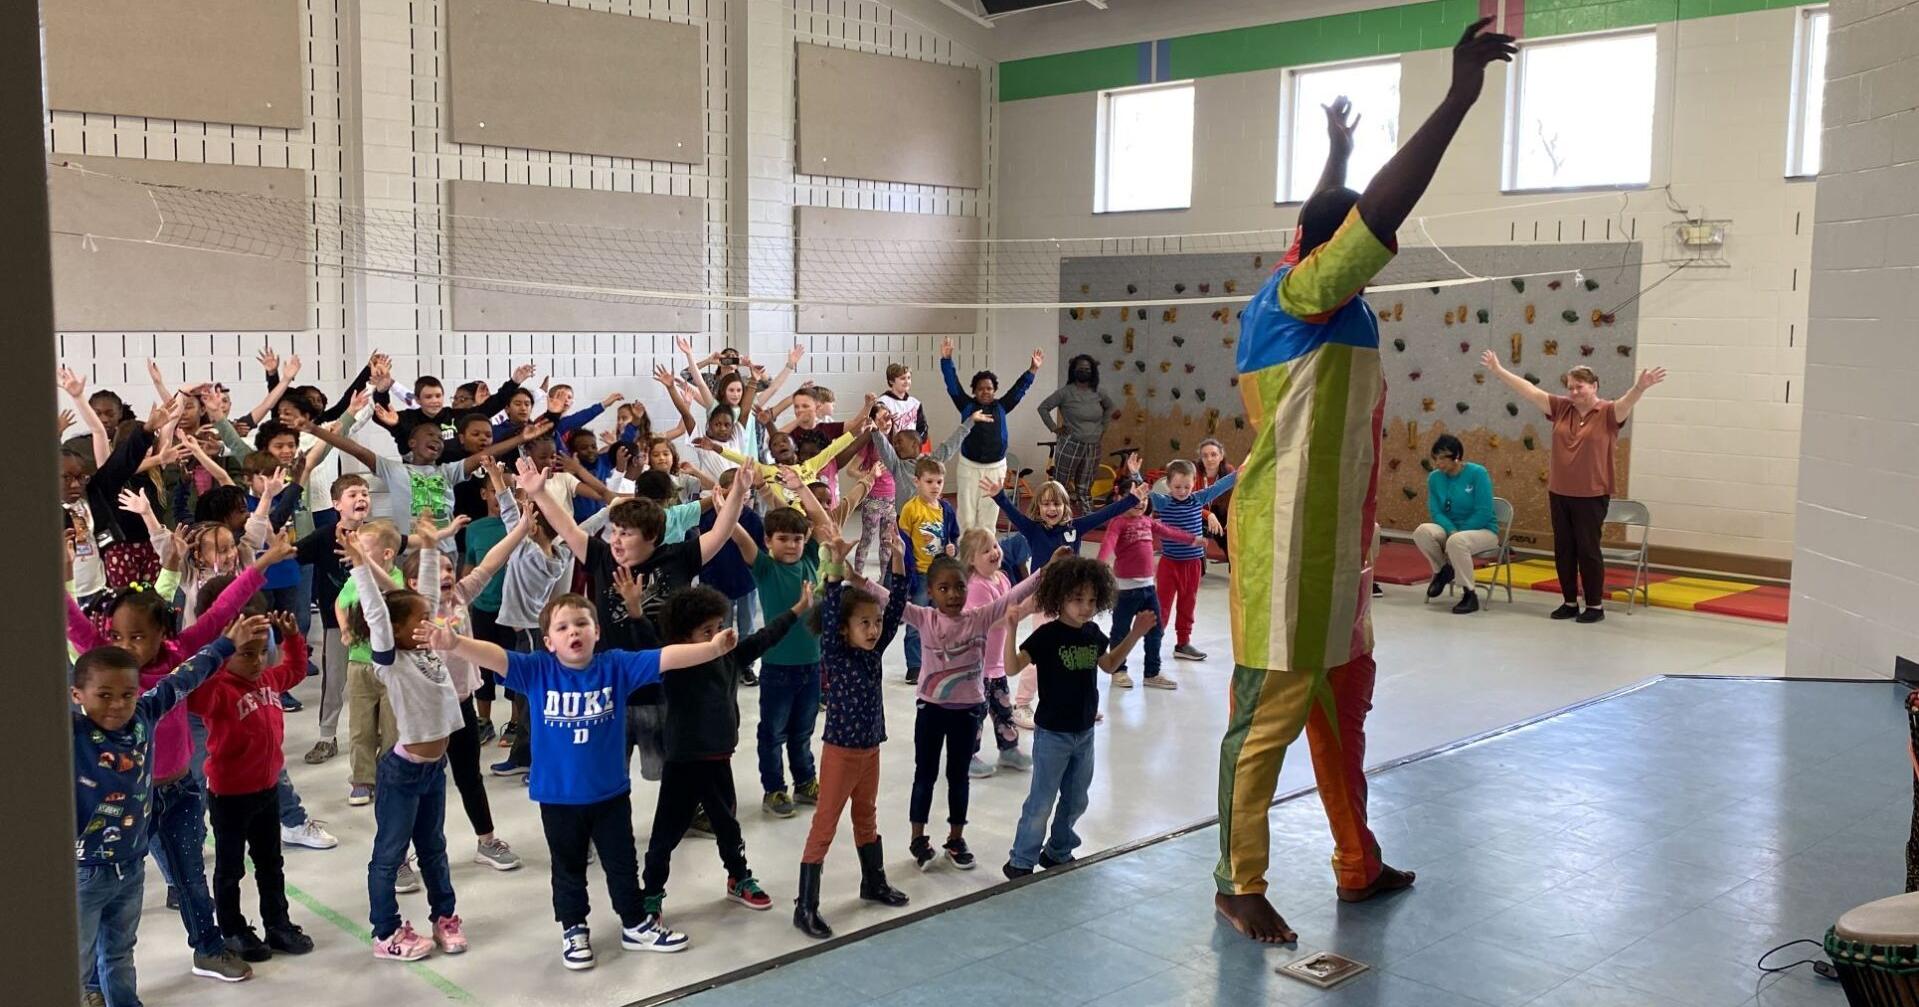 ‘The world is movement’: West African dance comes to Jones County schools